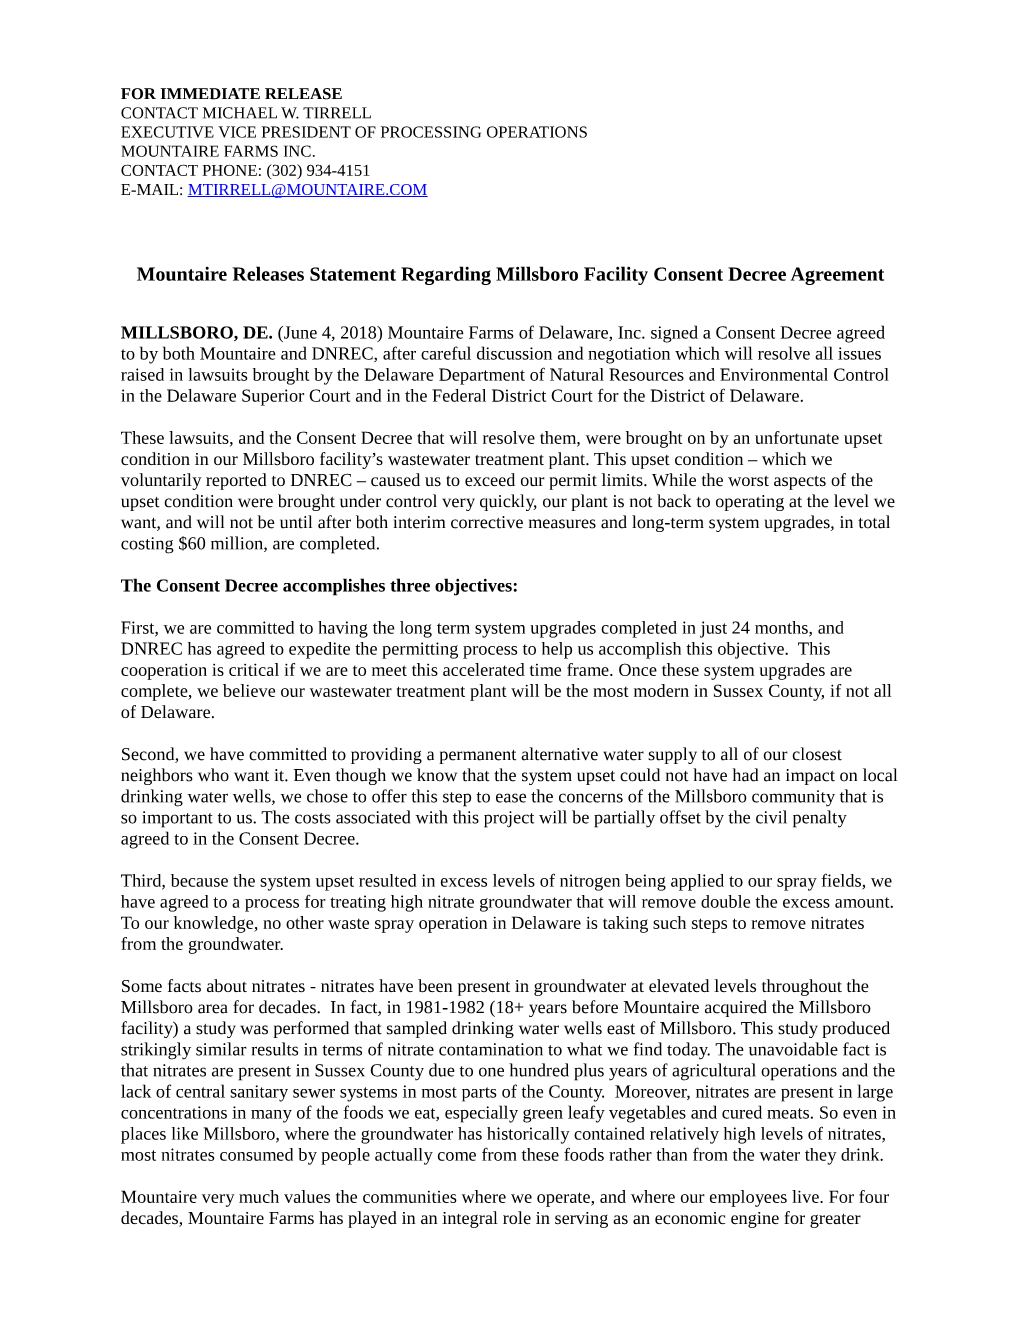 Mountaire Releases Statement Regarding Millsboro Facility Consent Decree Agreement